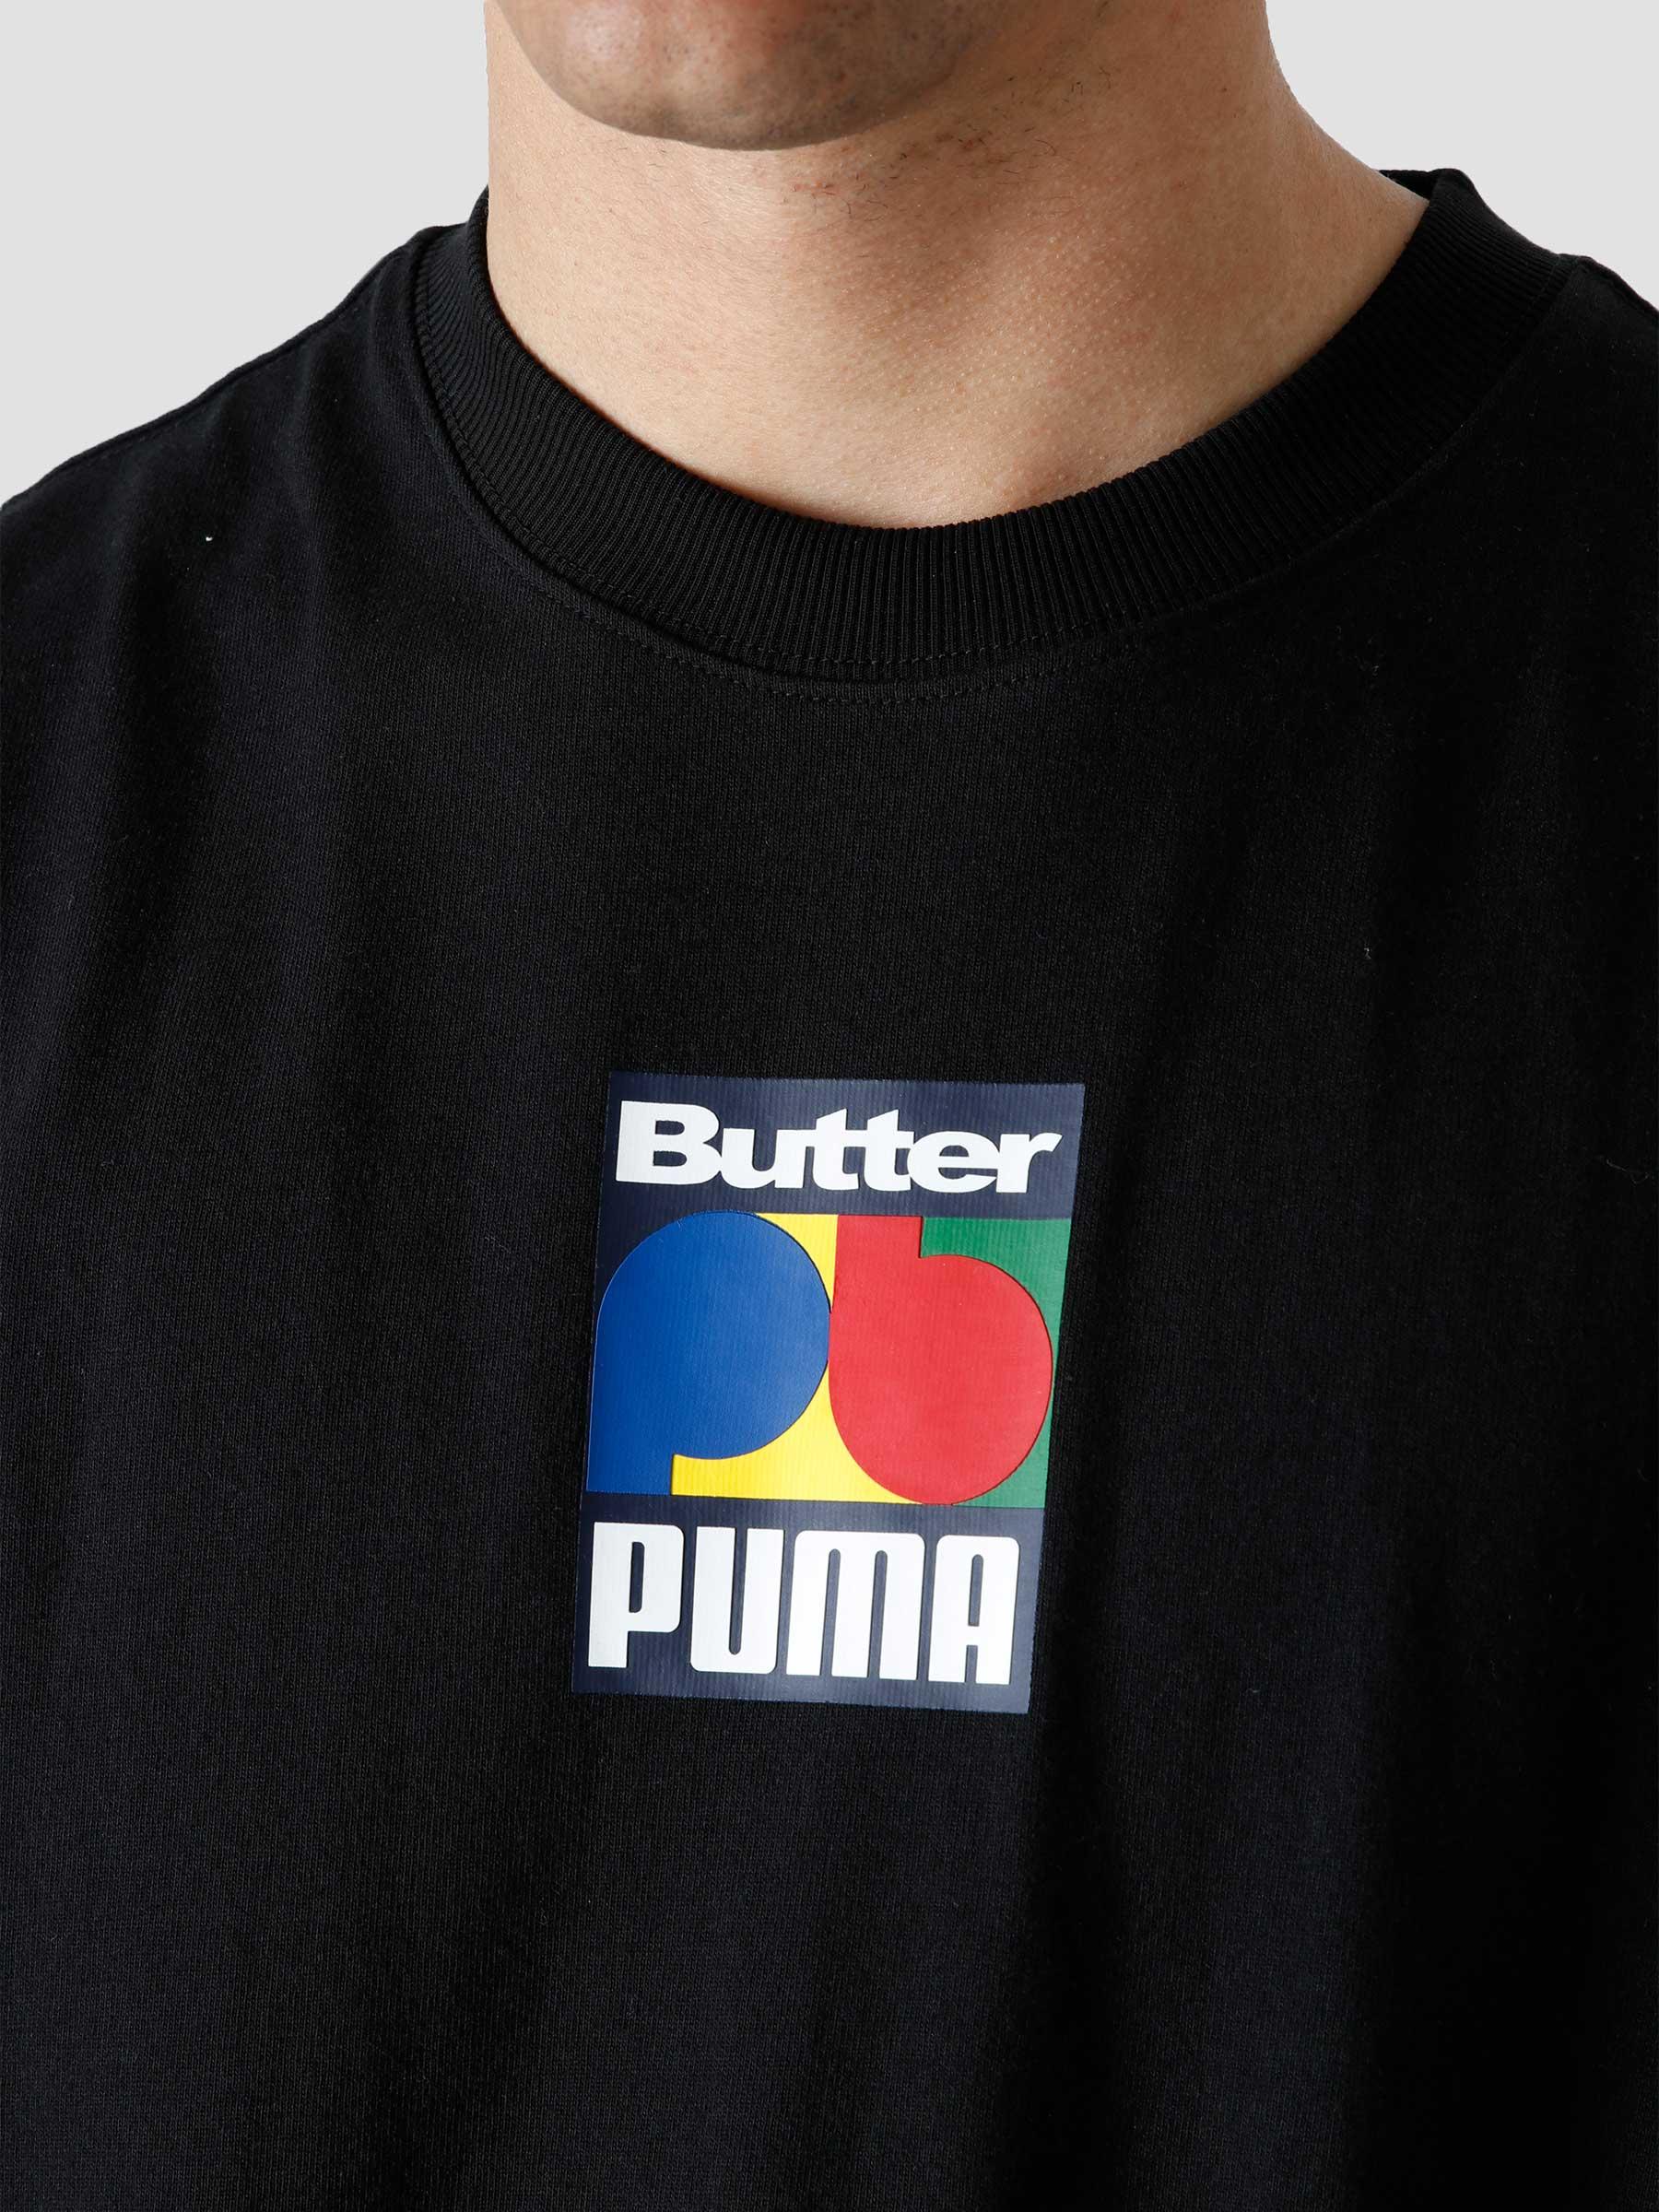 Puma X Butter Goods Graphic T-Shirt Puma Black 534058 01